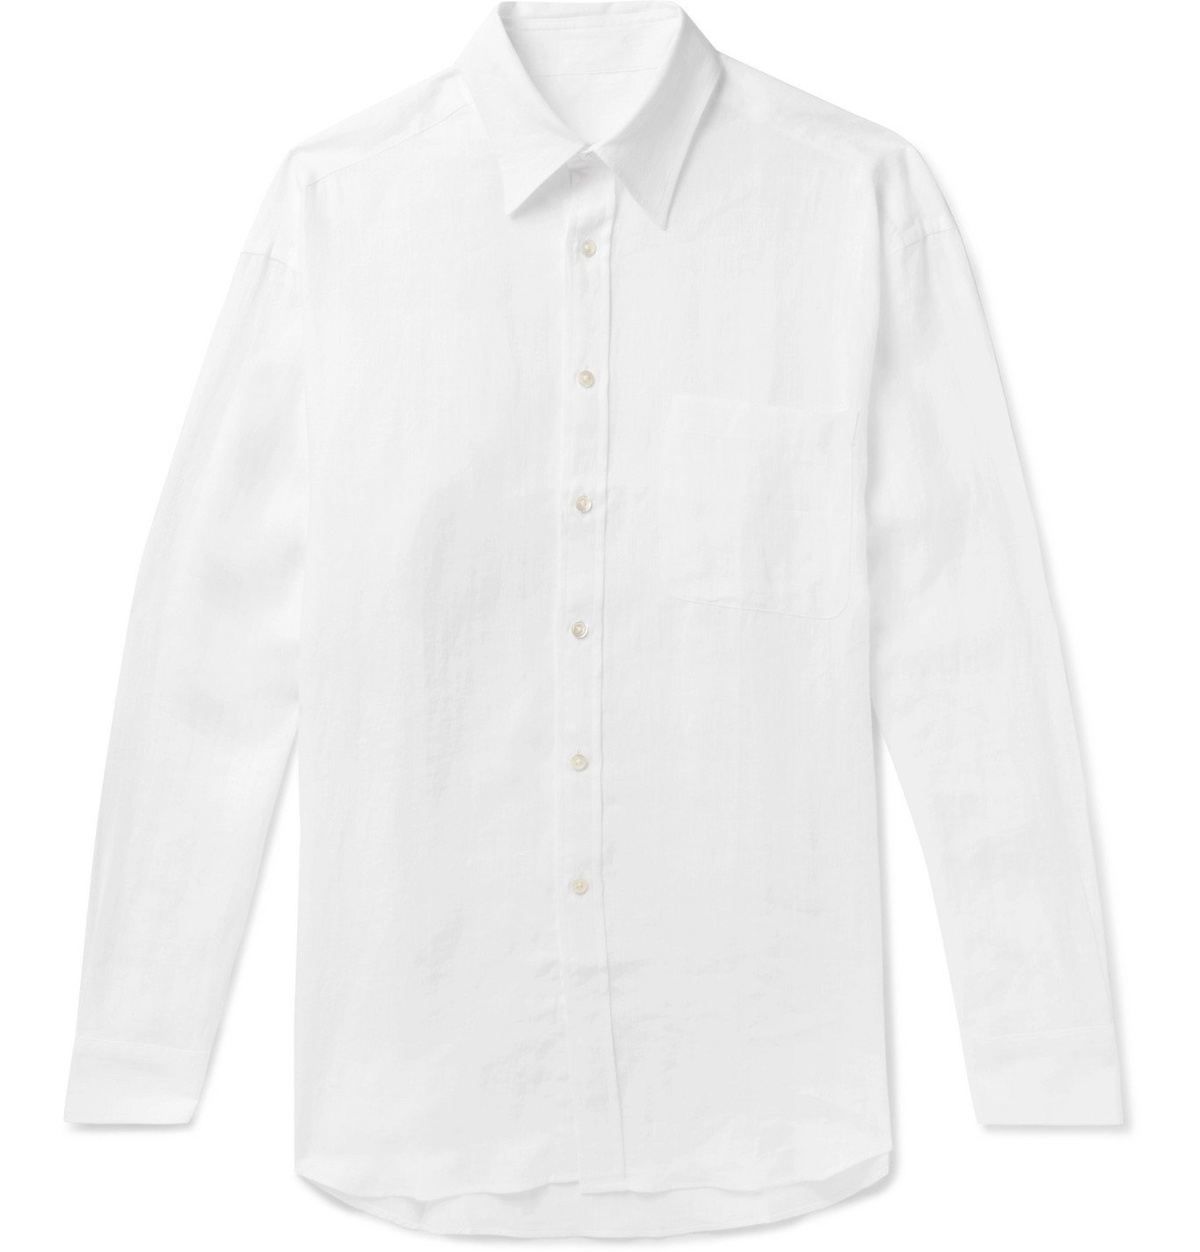 Anderson & Sheppard - Linen Shirt - White Anderson & Sheppard